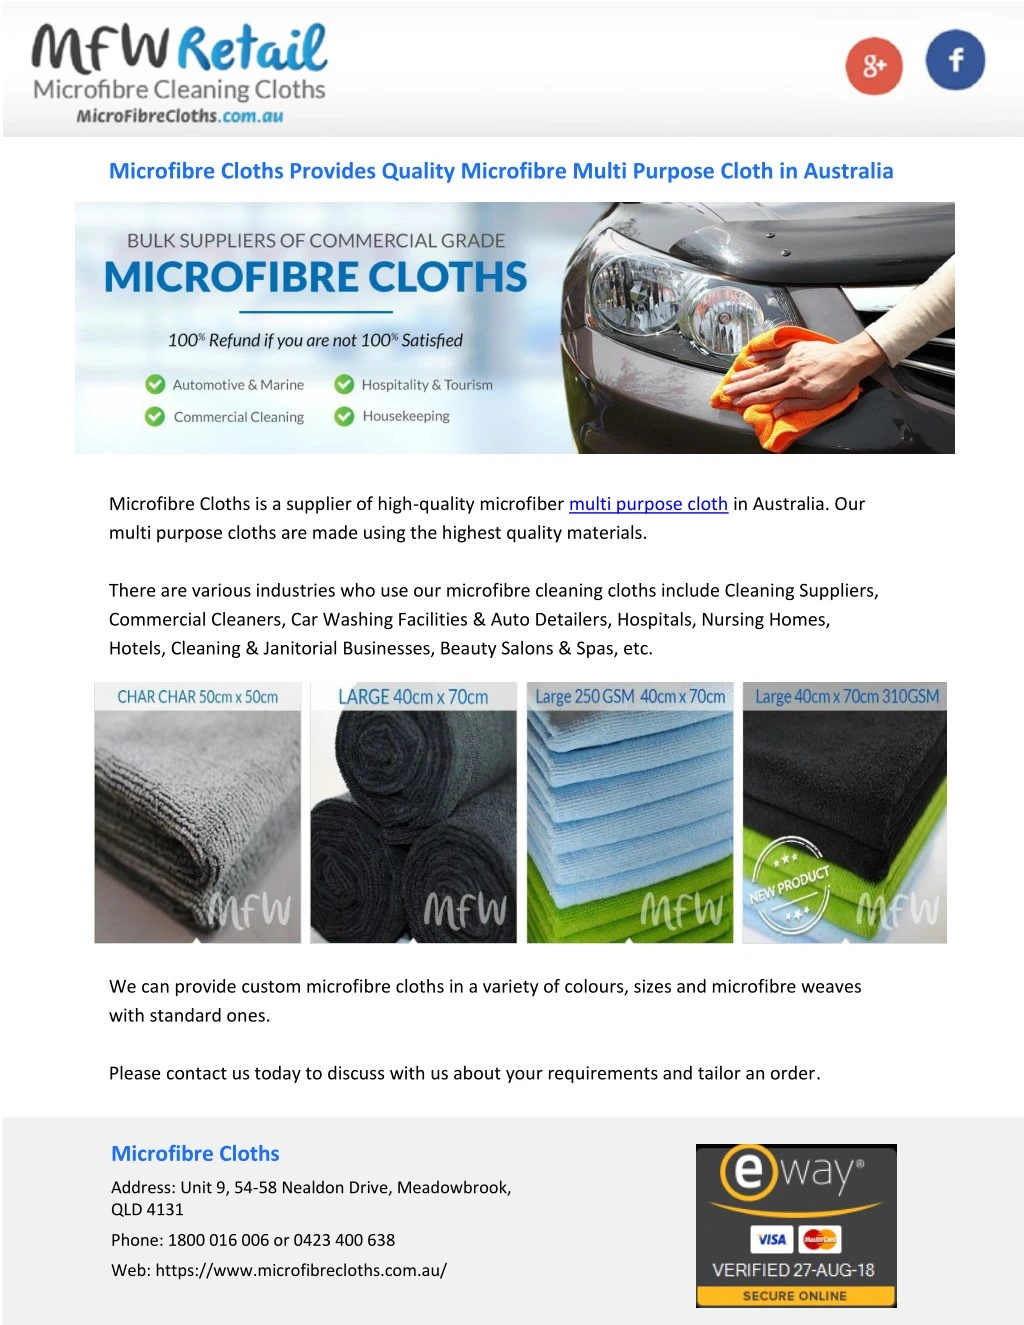 microfibre cloths provides quality microfibre